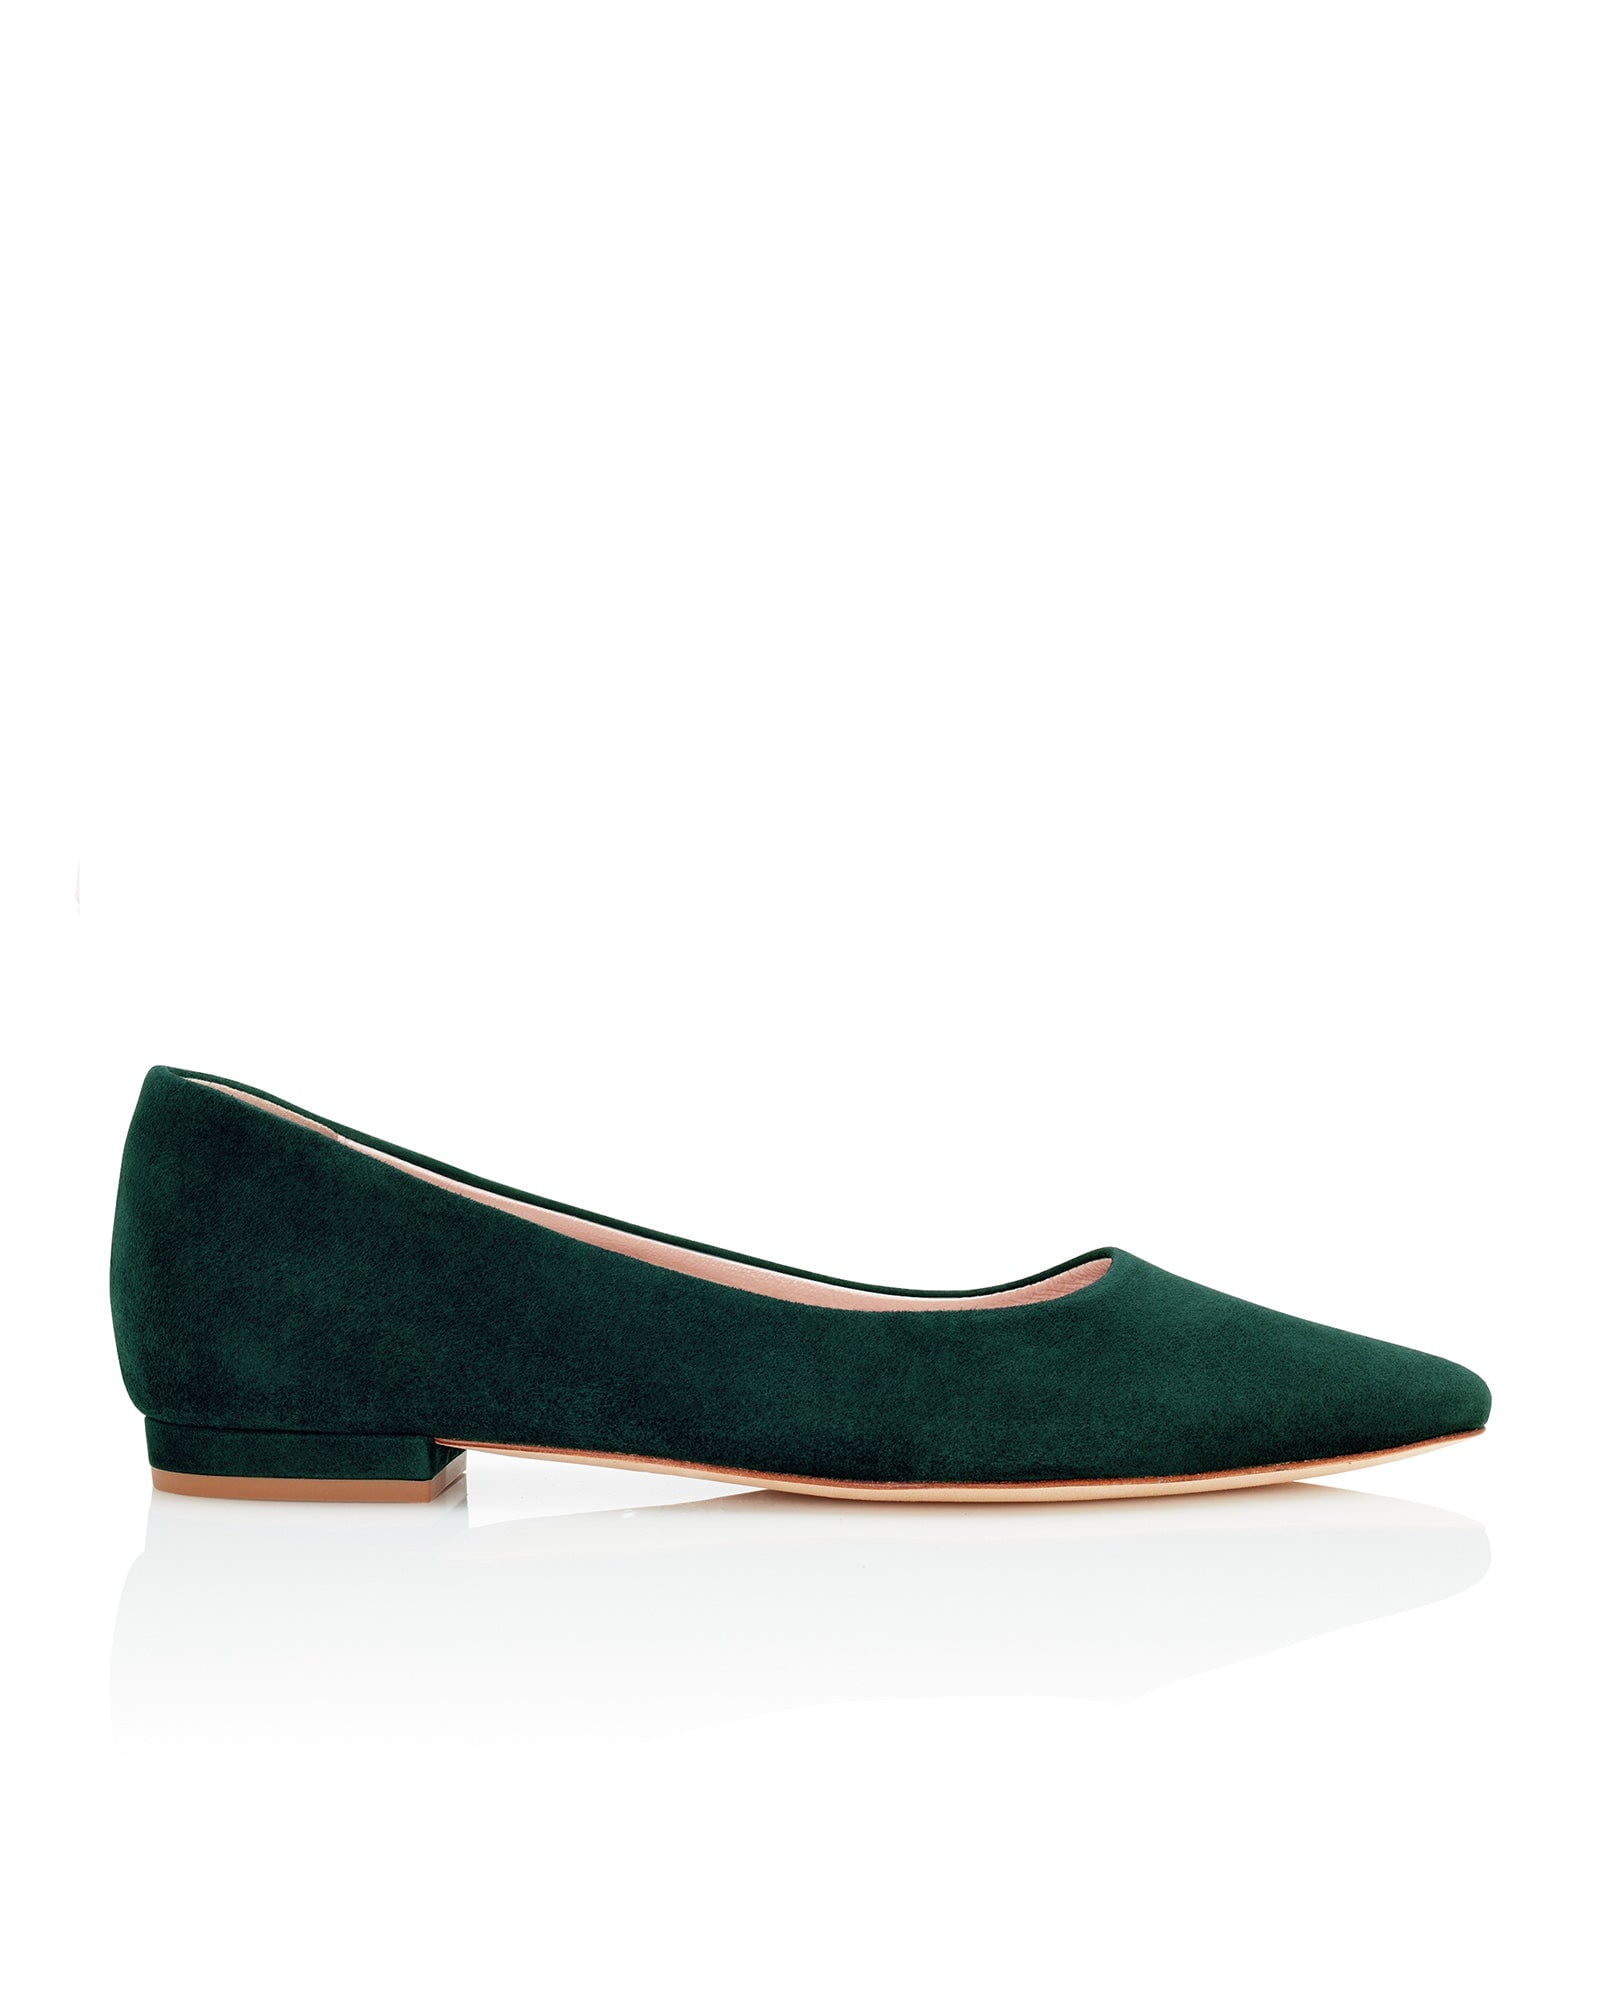 Lulu Greenery Fashion Shoe Green Suede Pointed Flat  image